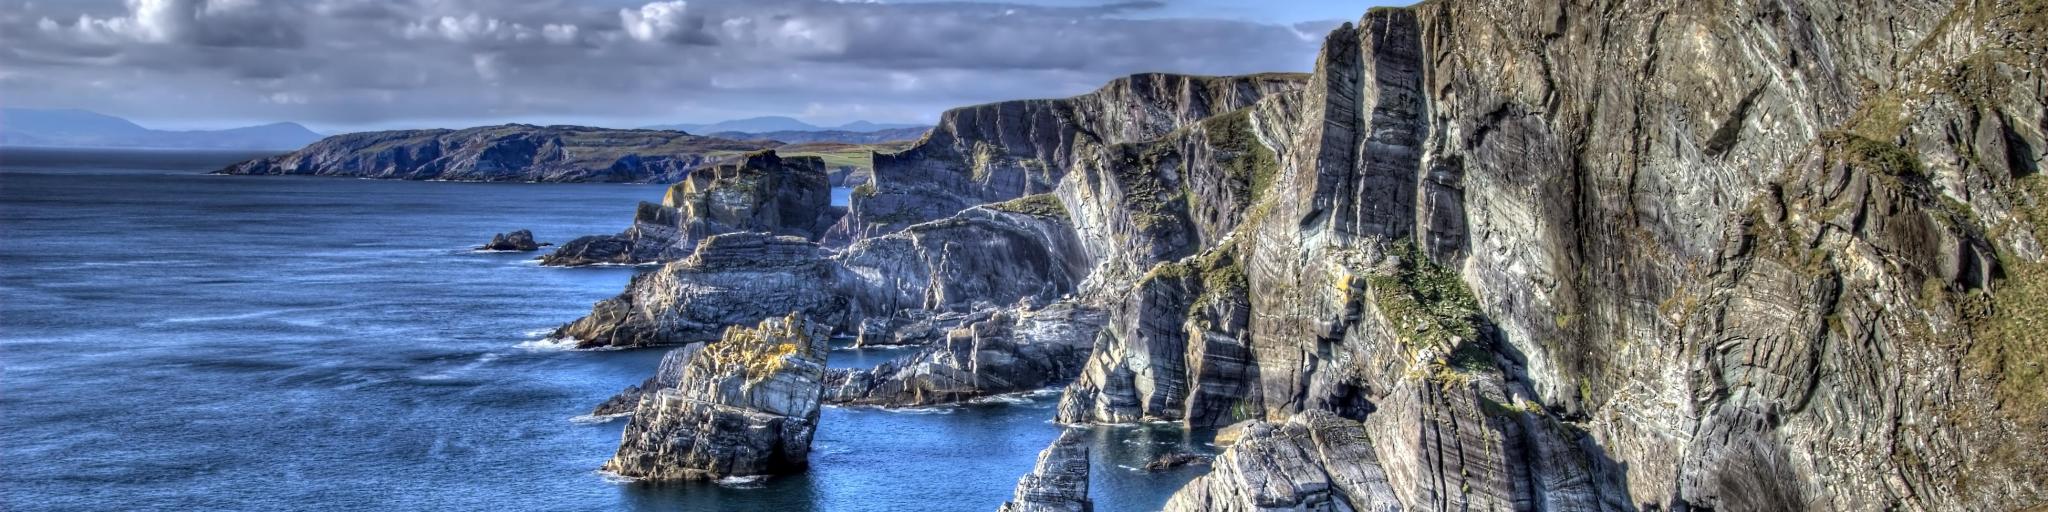 Mizen Head, Ireland with the Atlantic coast cliffs at County Cork.